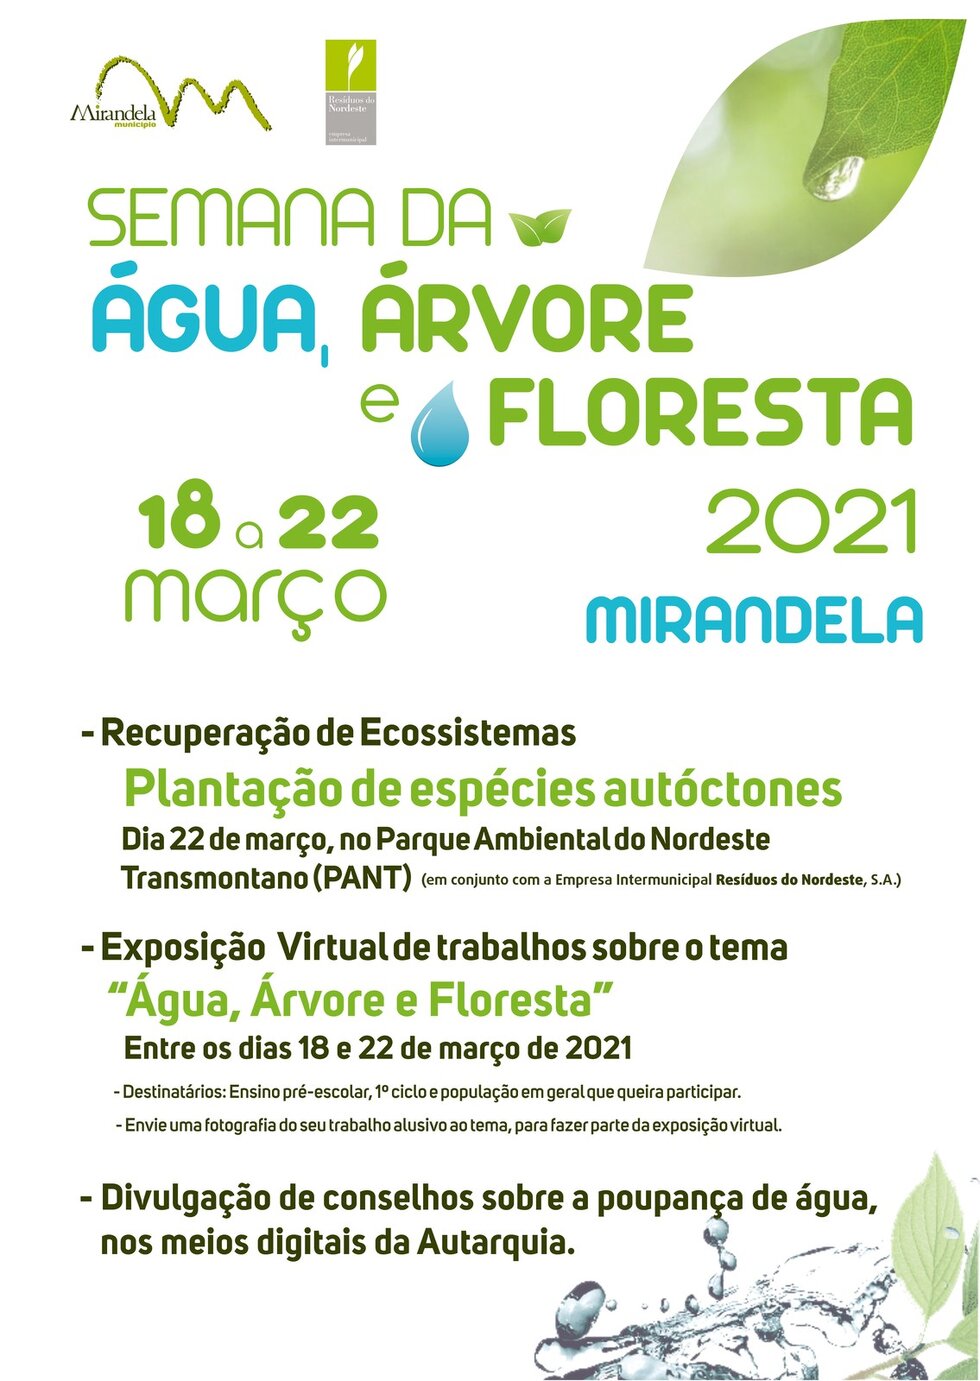 cartaz_semana_da_agua_arvore_e_floresta_2021_v2